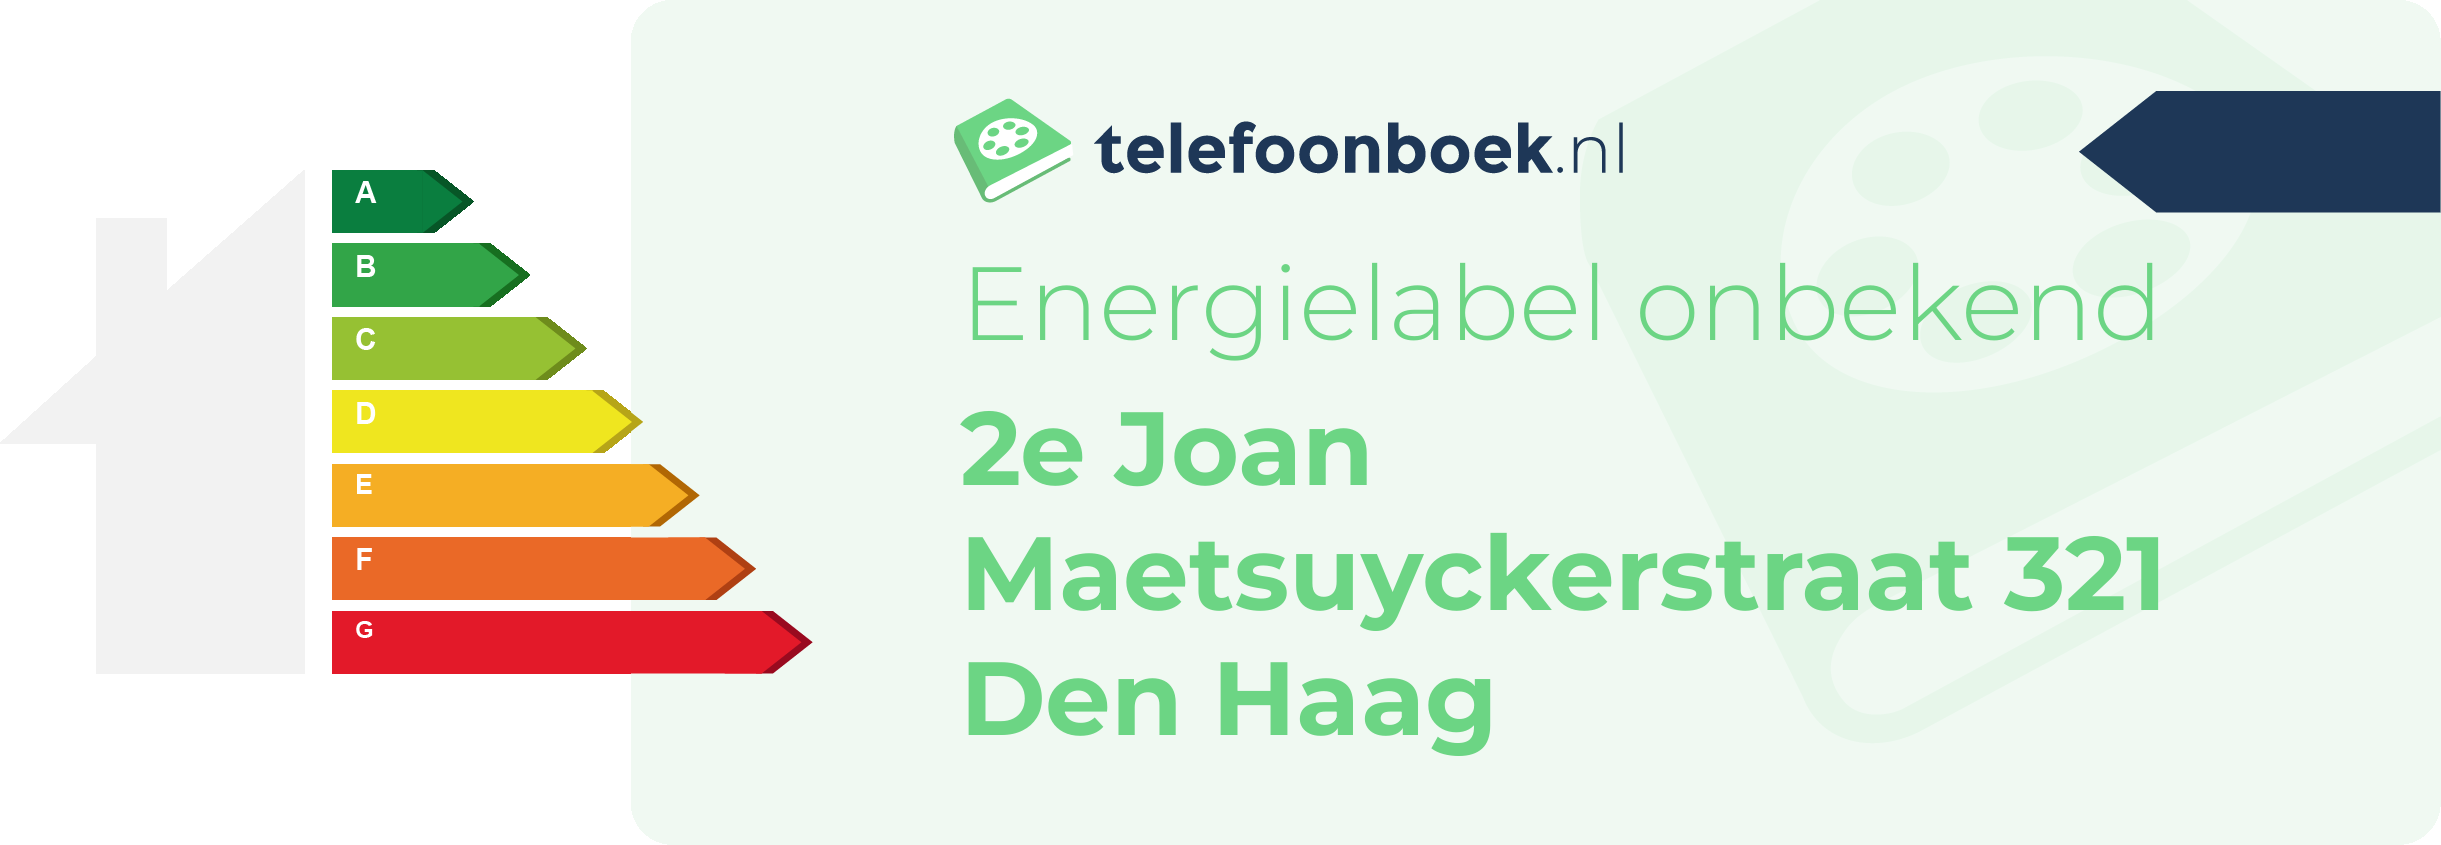 Energielabel 2e Joan Maetsuyckerstraat 321 Den Haag